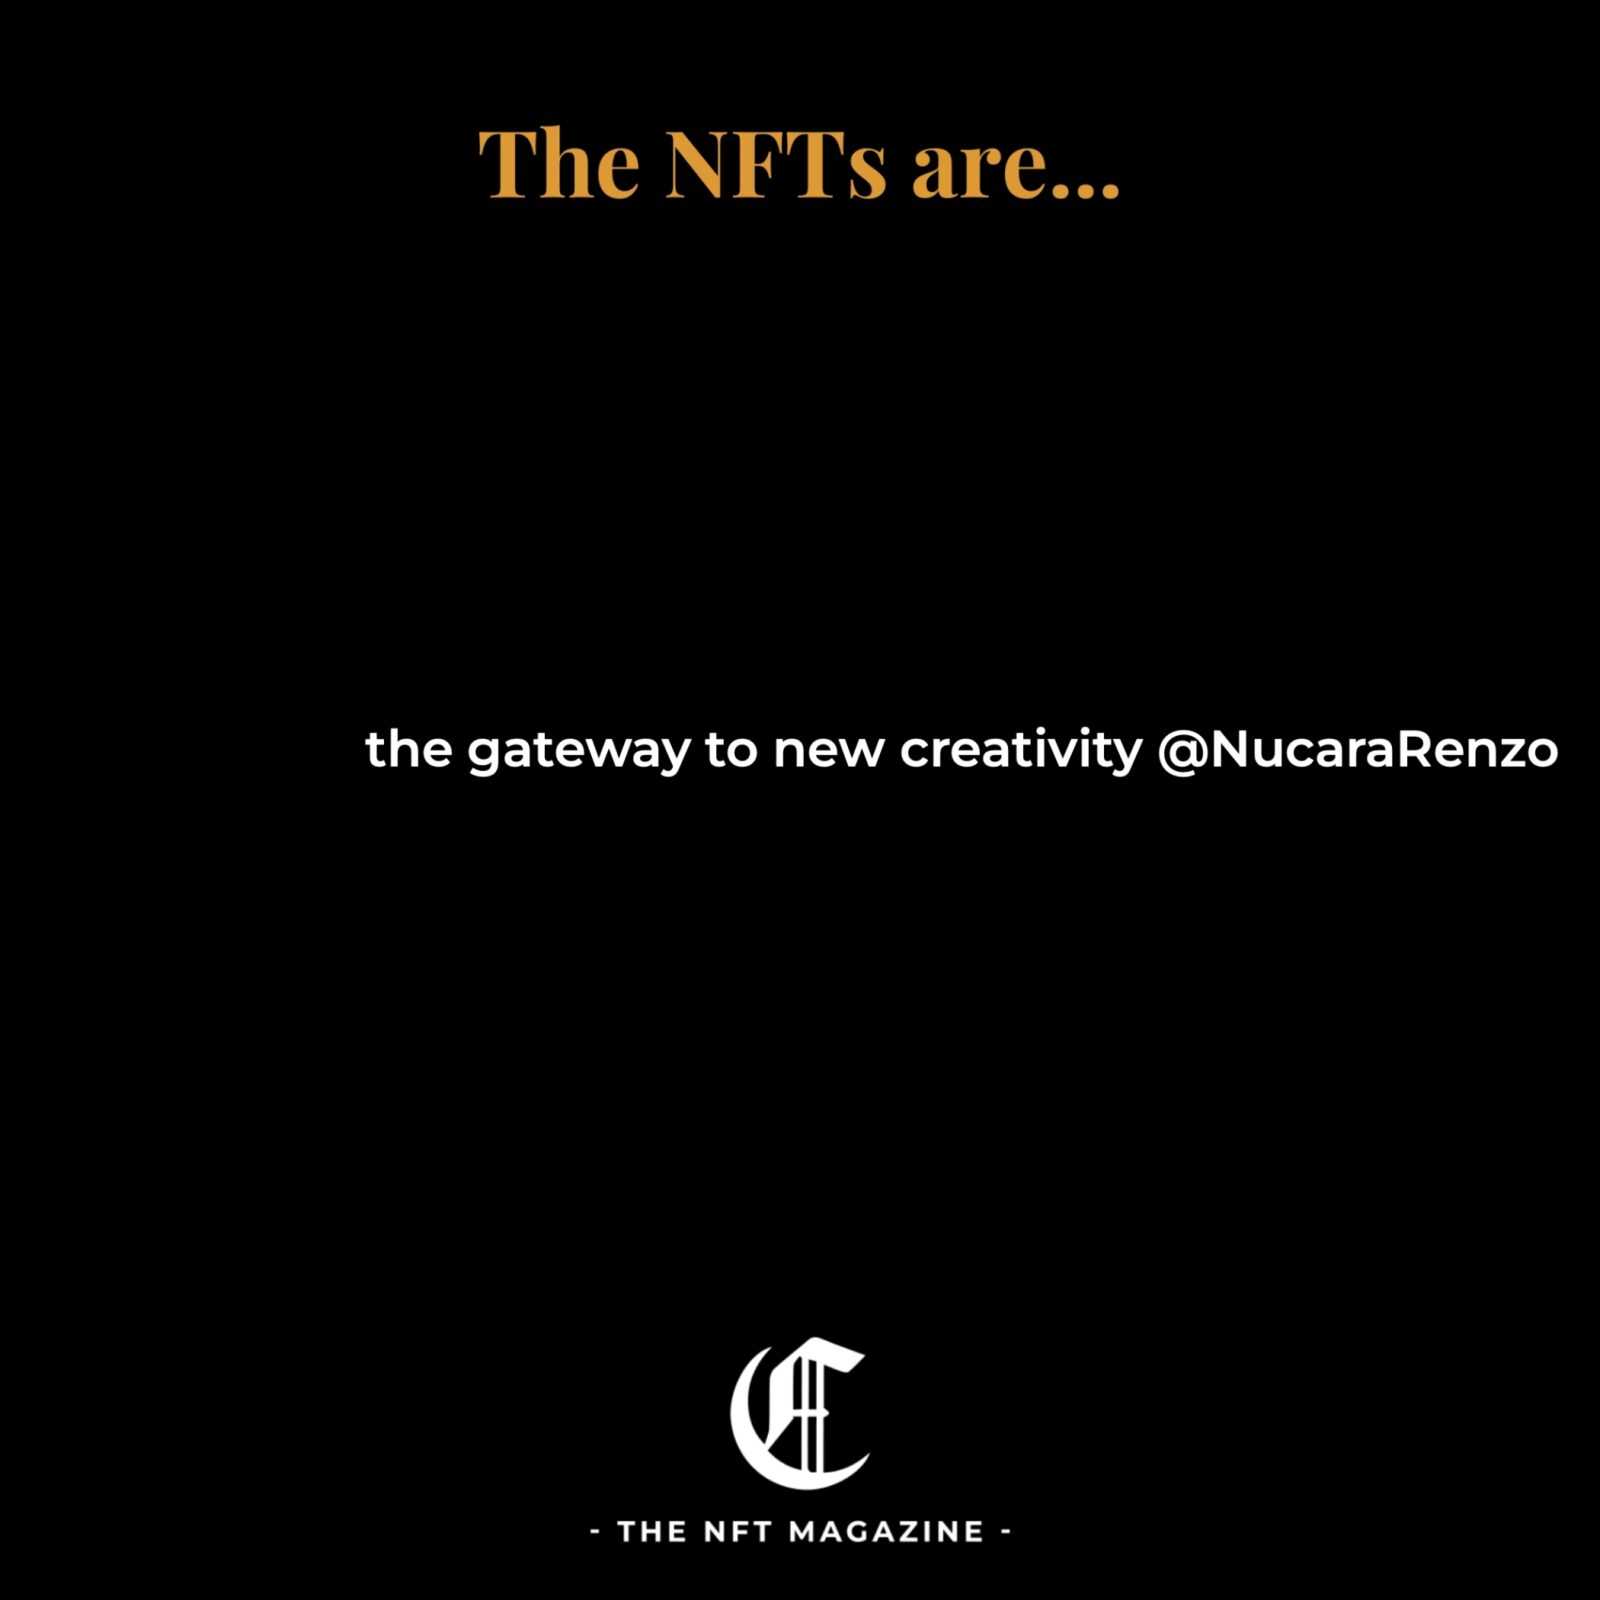  the gateway to new creativity @NucaraRenzo